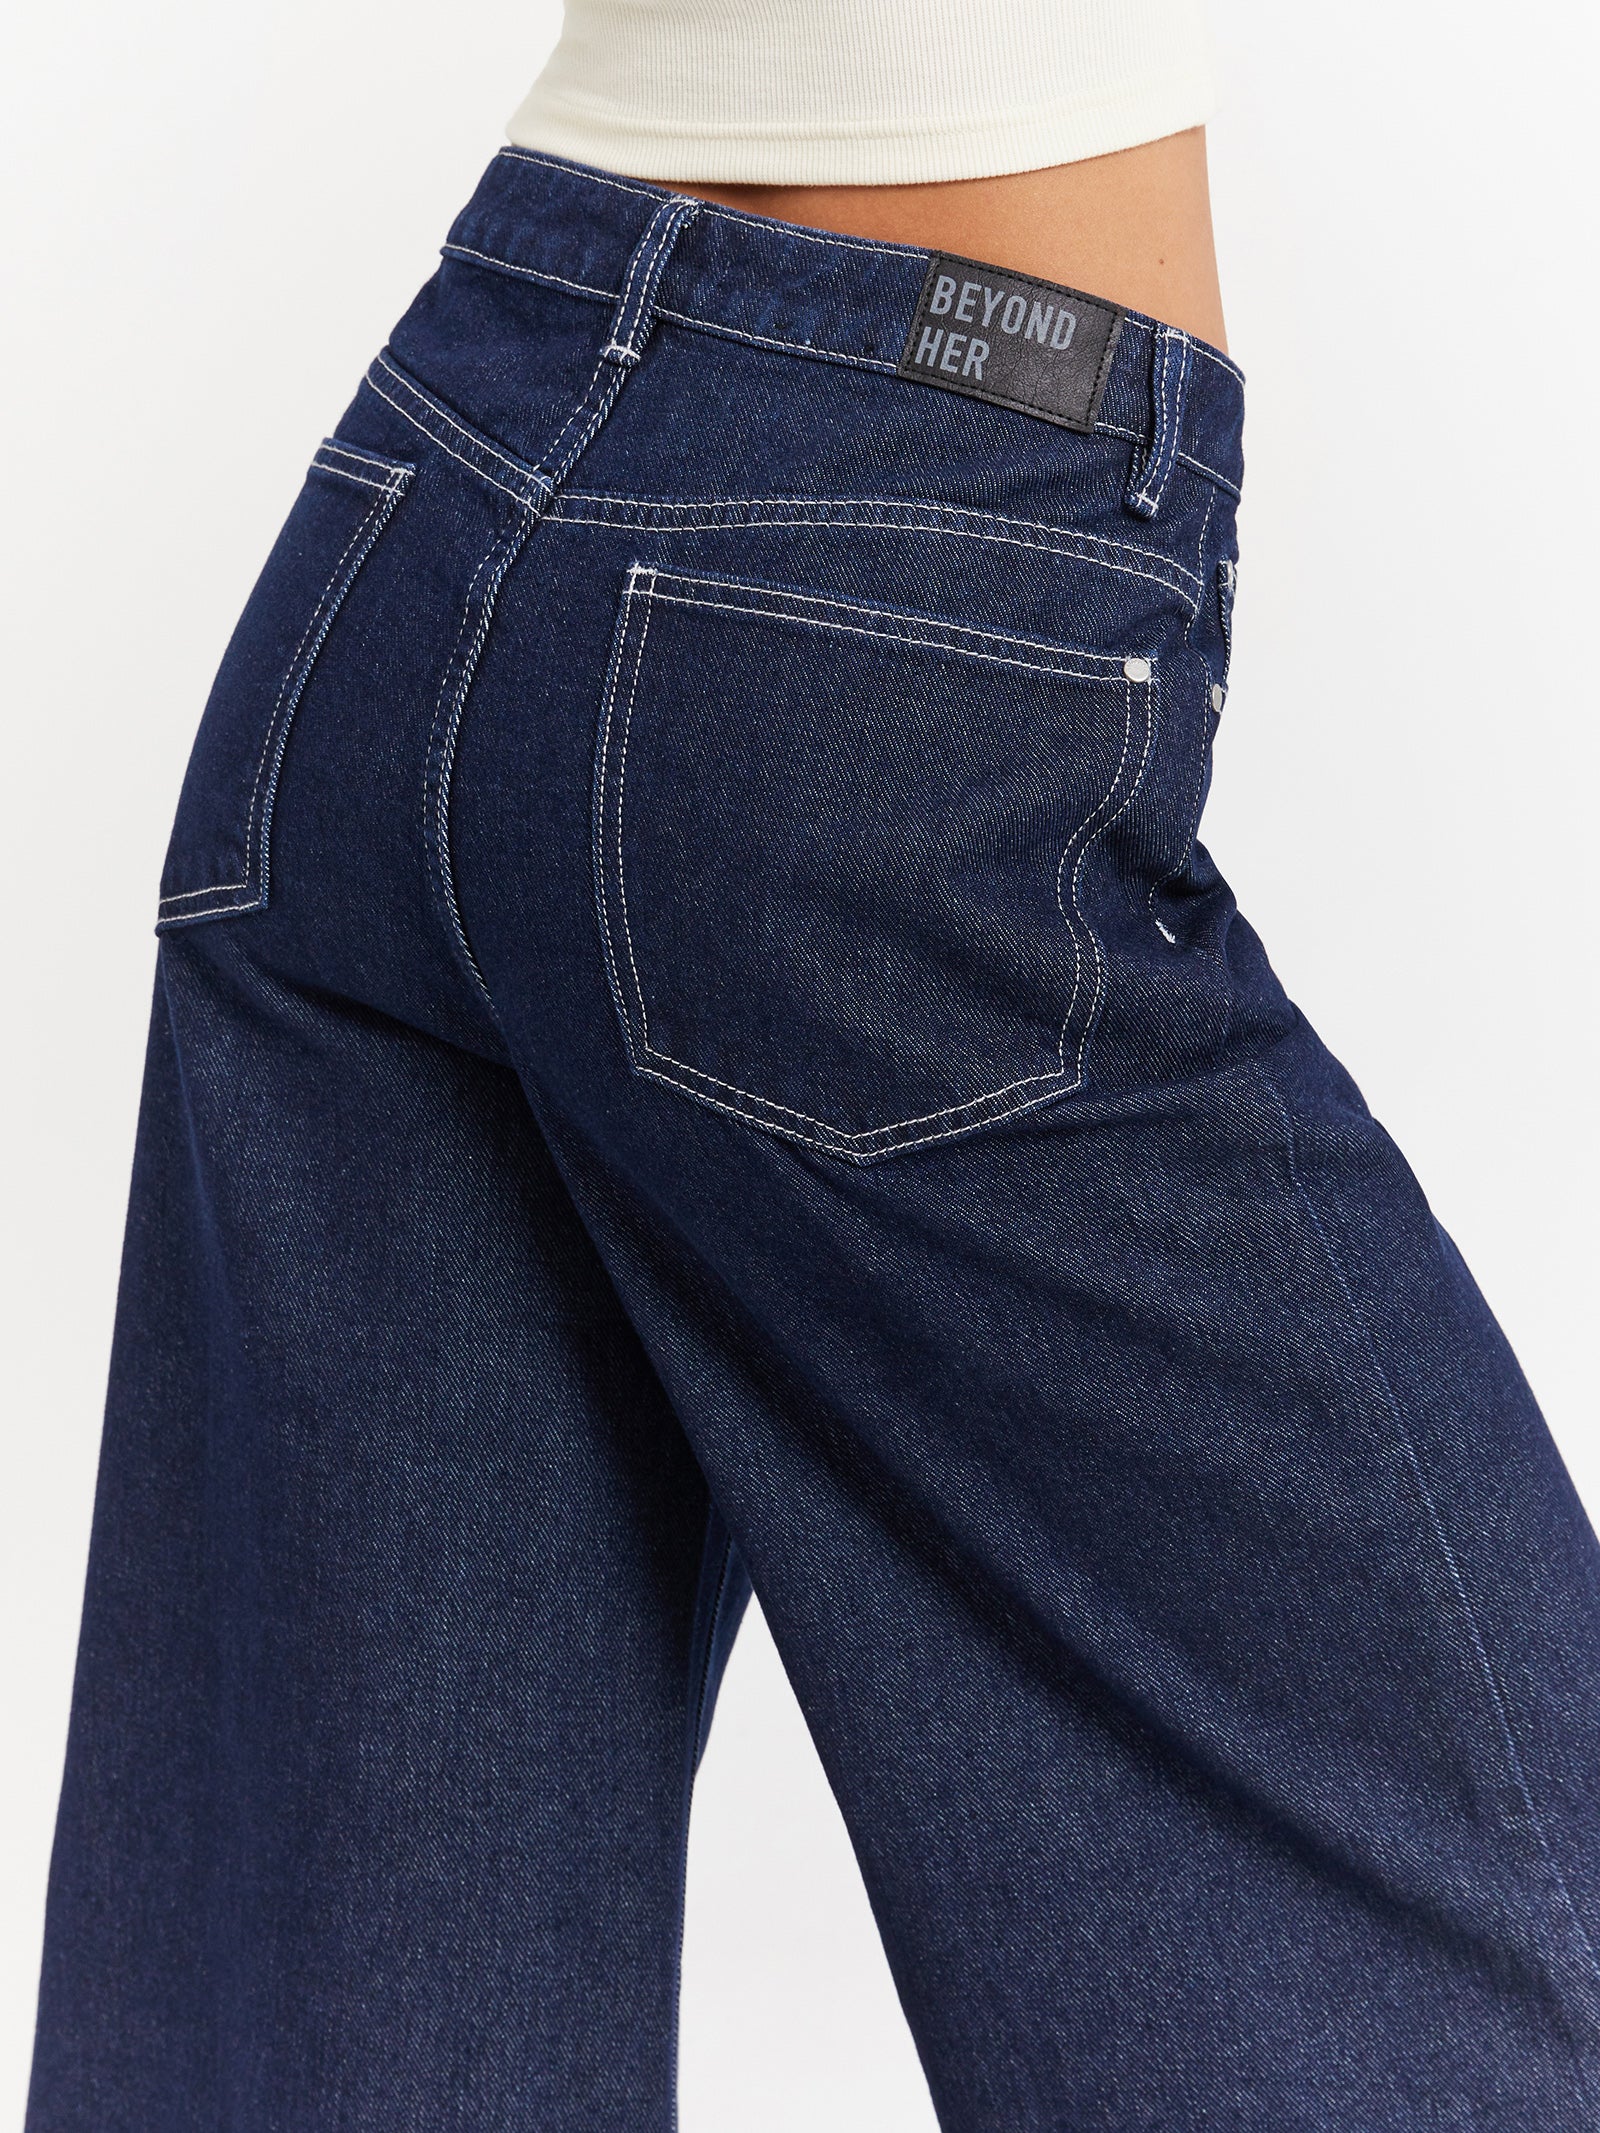 Maeve Ultra Wide Jeans in Raw Indigo